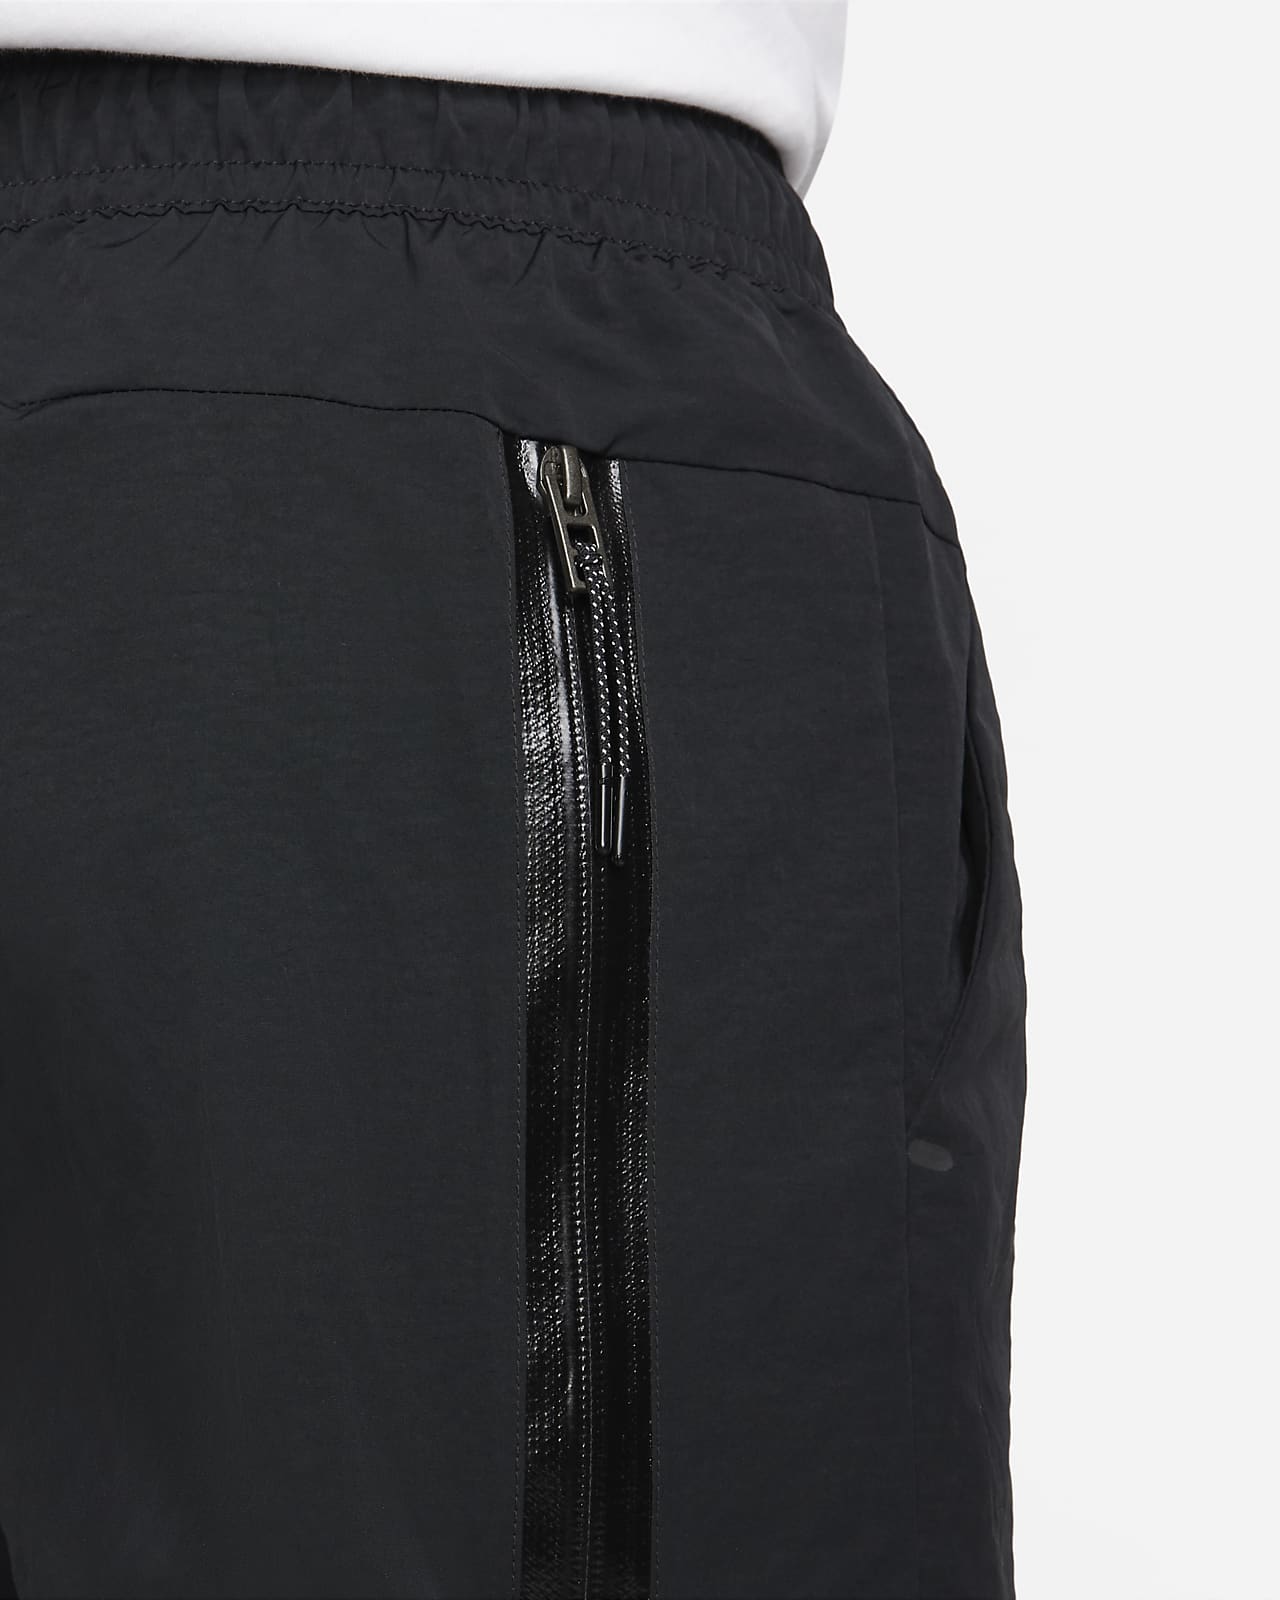 NIKE PANTS MENS 2XL Sportswear Tech Essentials Unlined Commuter Athleisure  Black $109.57 - PicClick AU